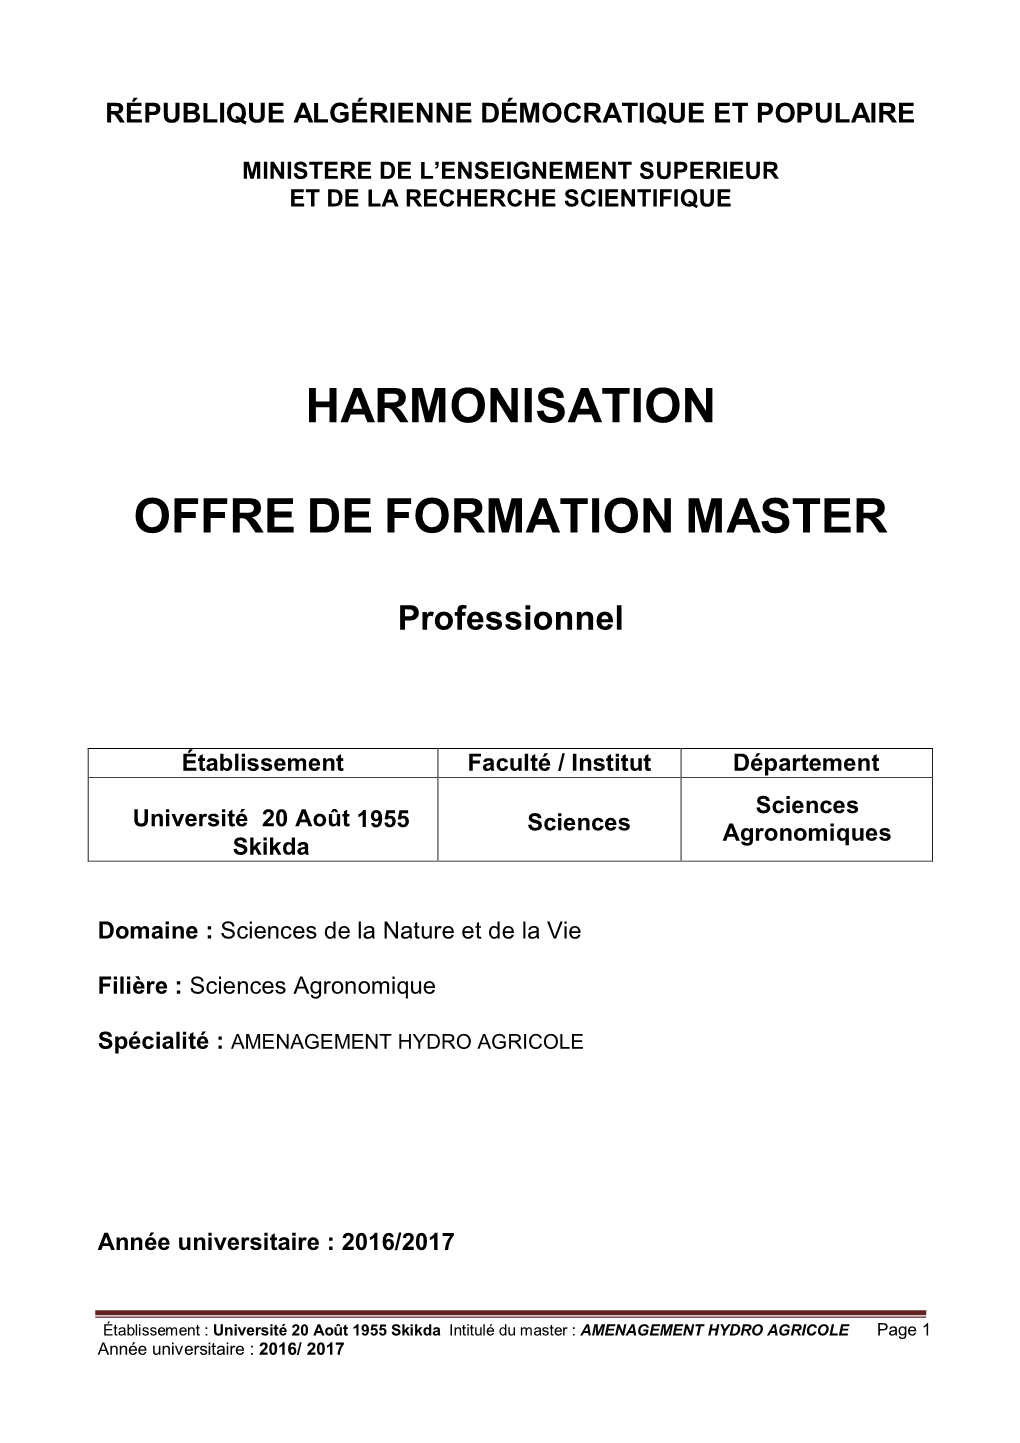 Harmonisation Offre De Formation Master